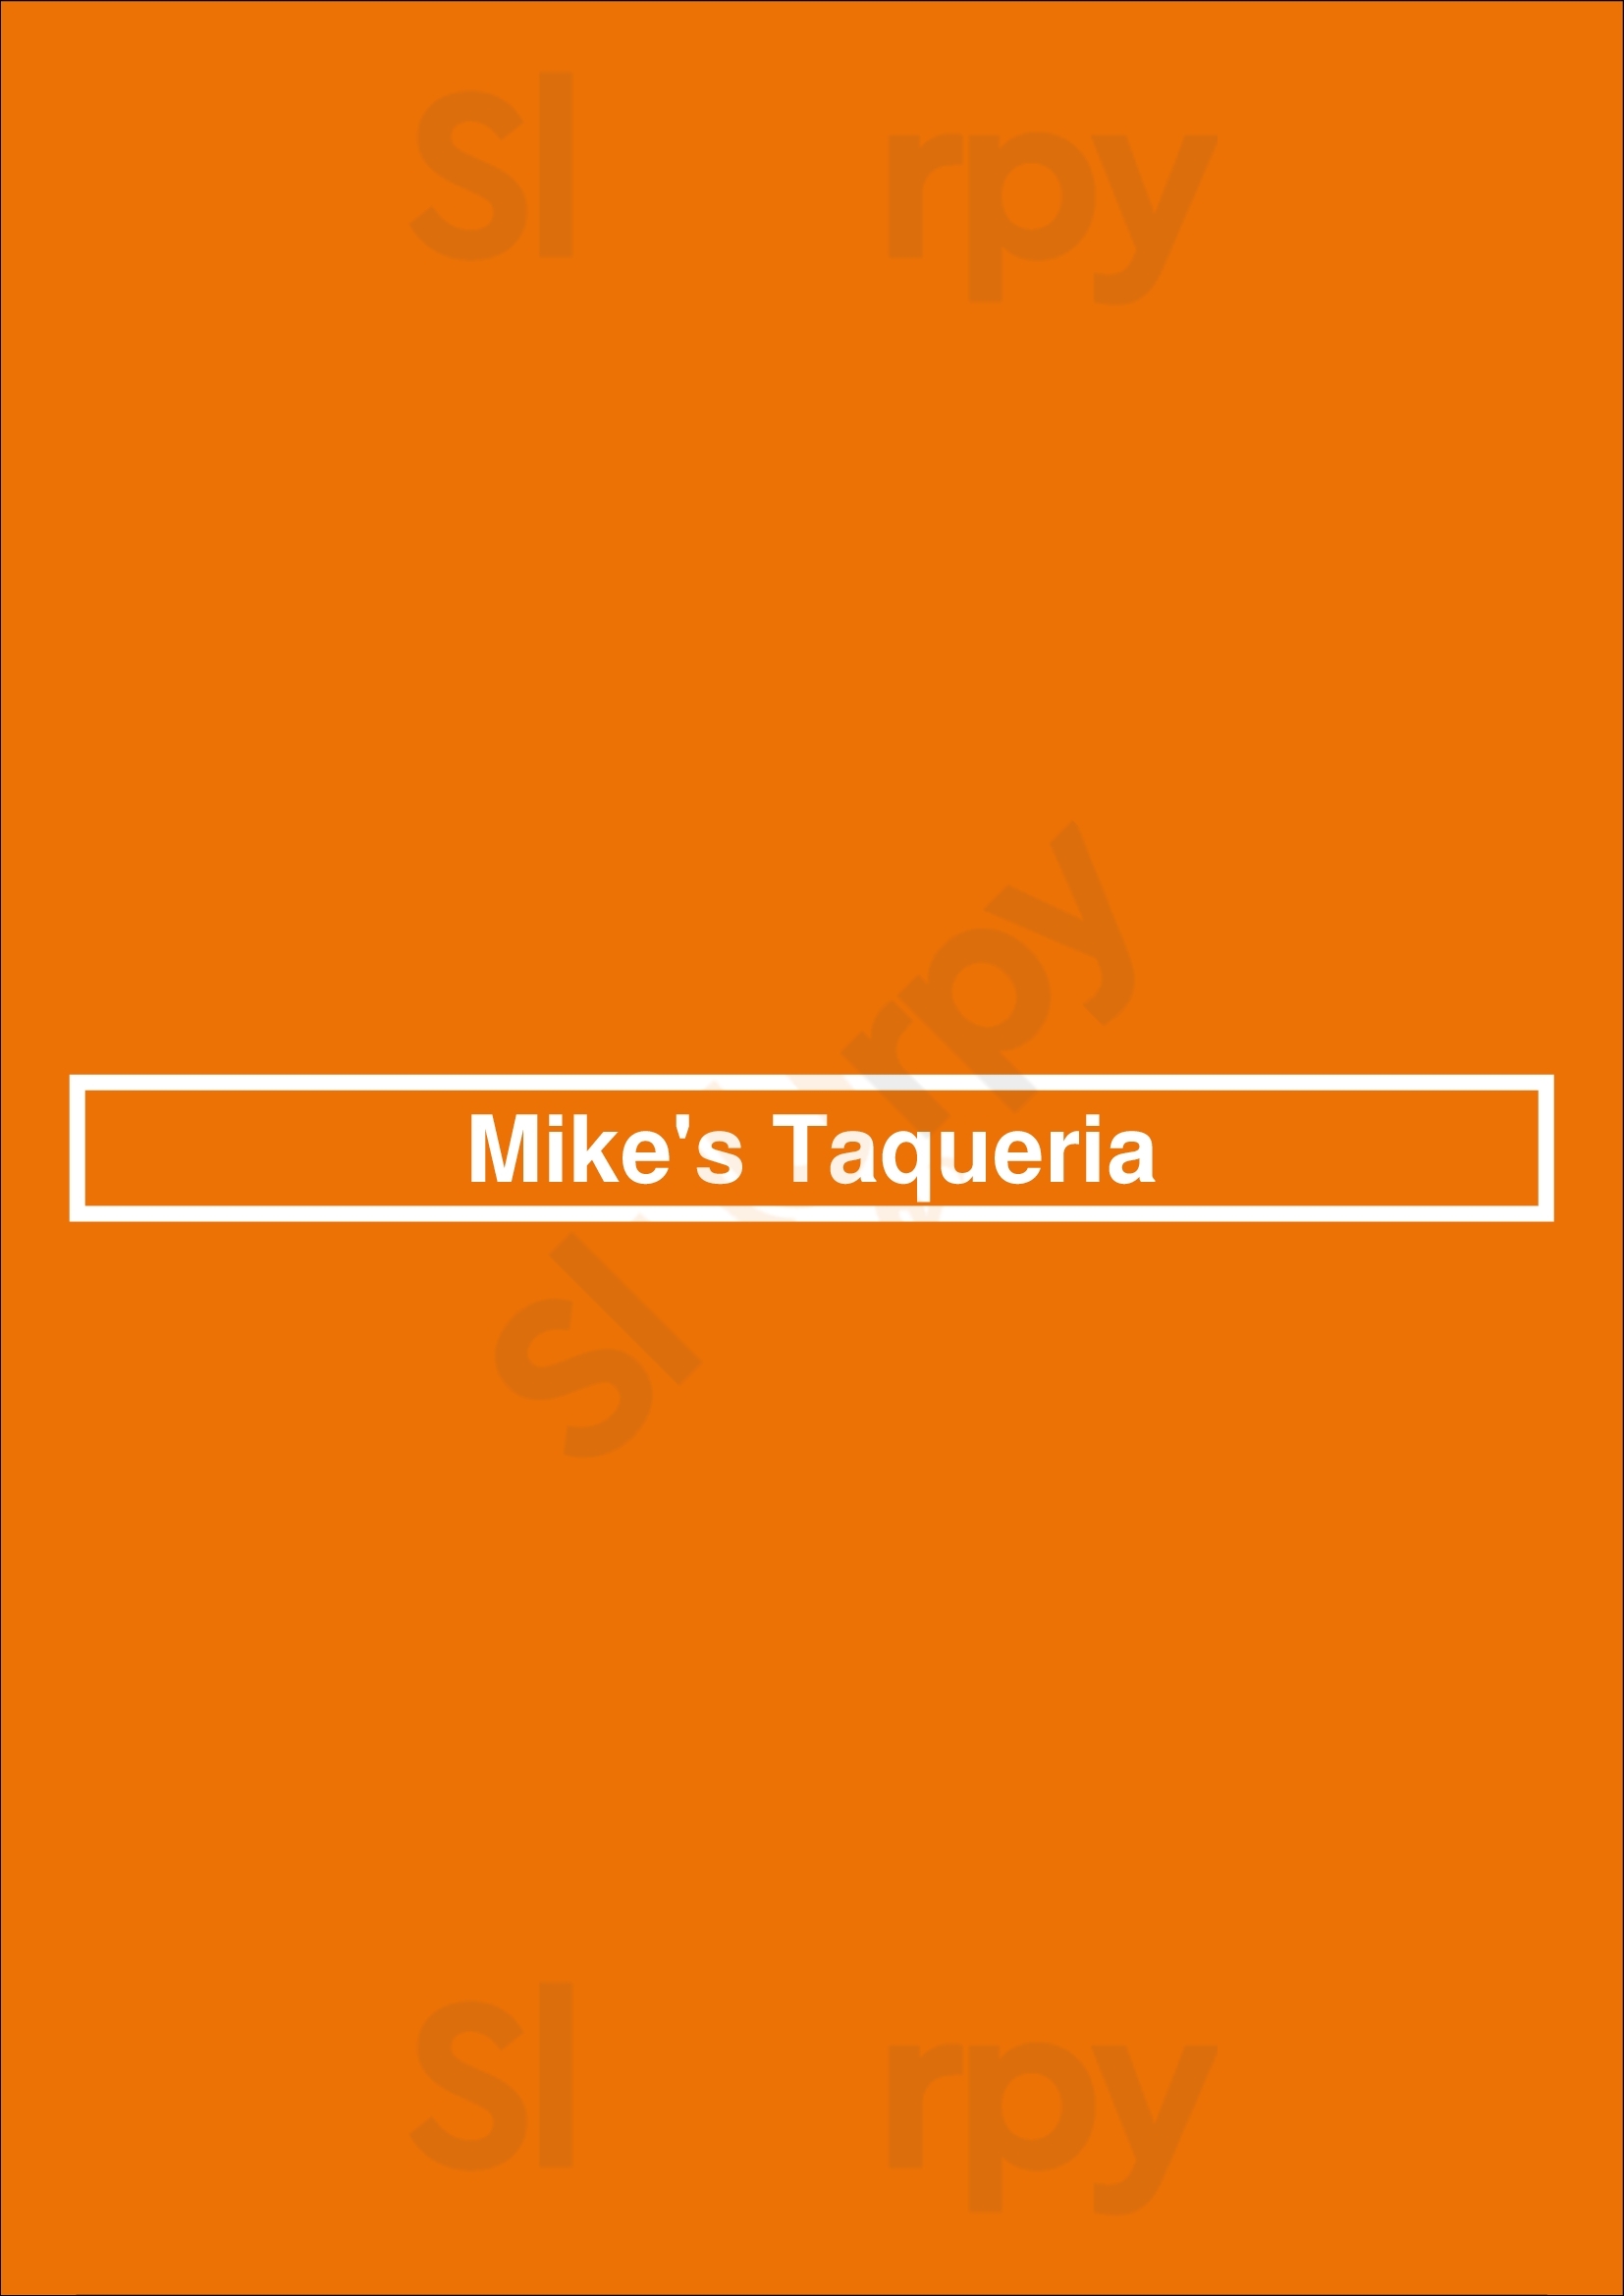 Mike's Taqueria Arlington Menu - 1